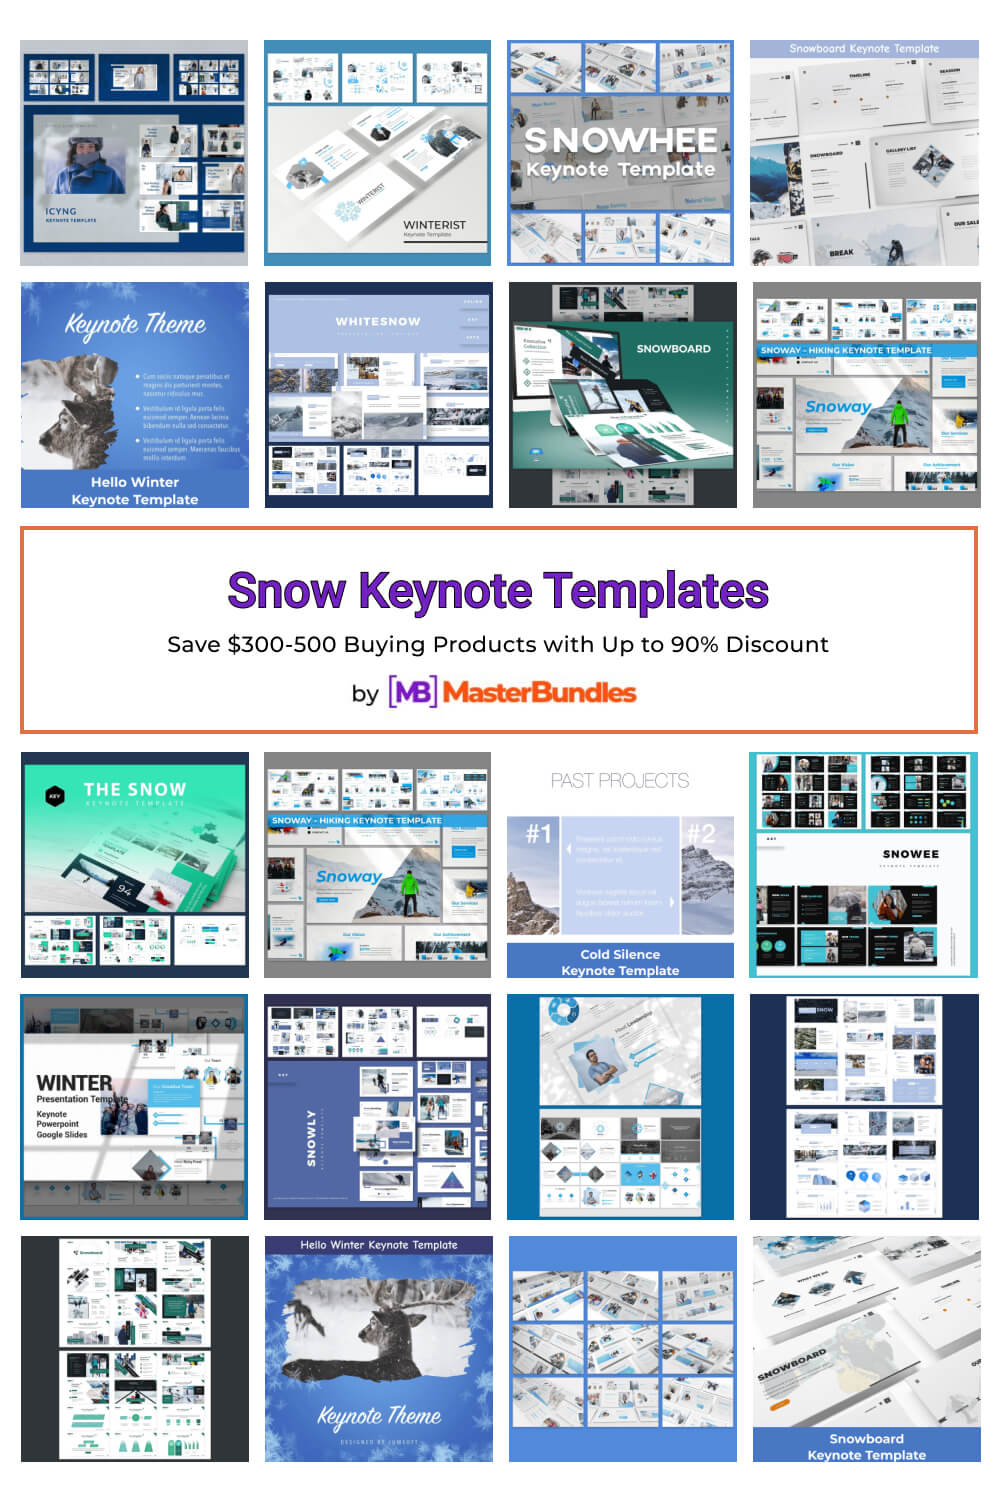 snow keynote templates pinterest image.